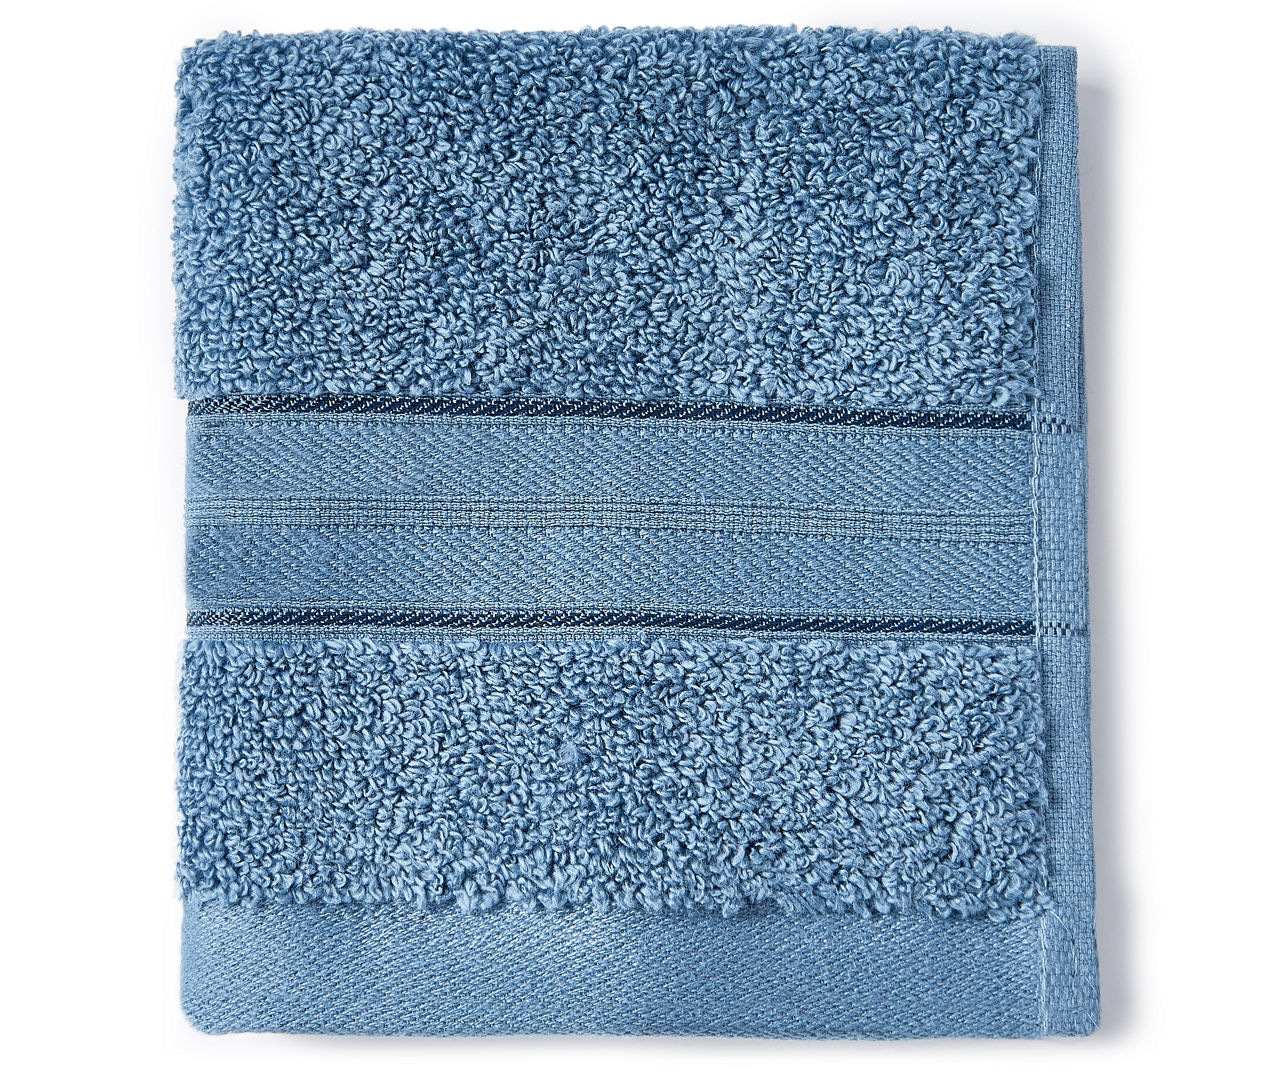 LC WASH TOWEL CORONET BLUE